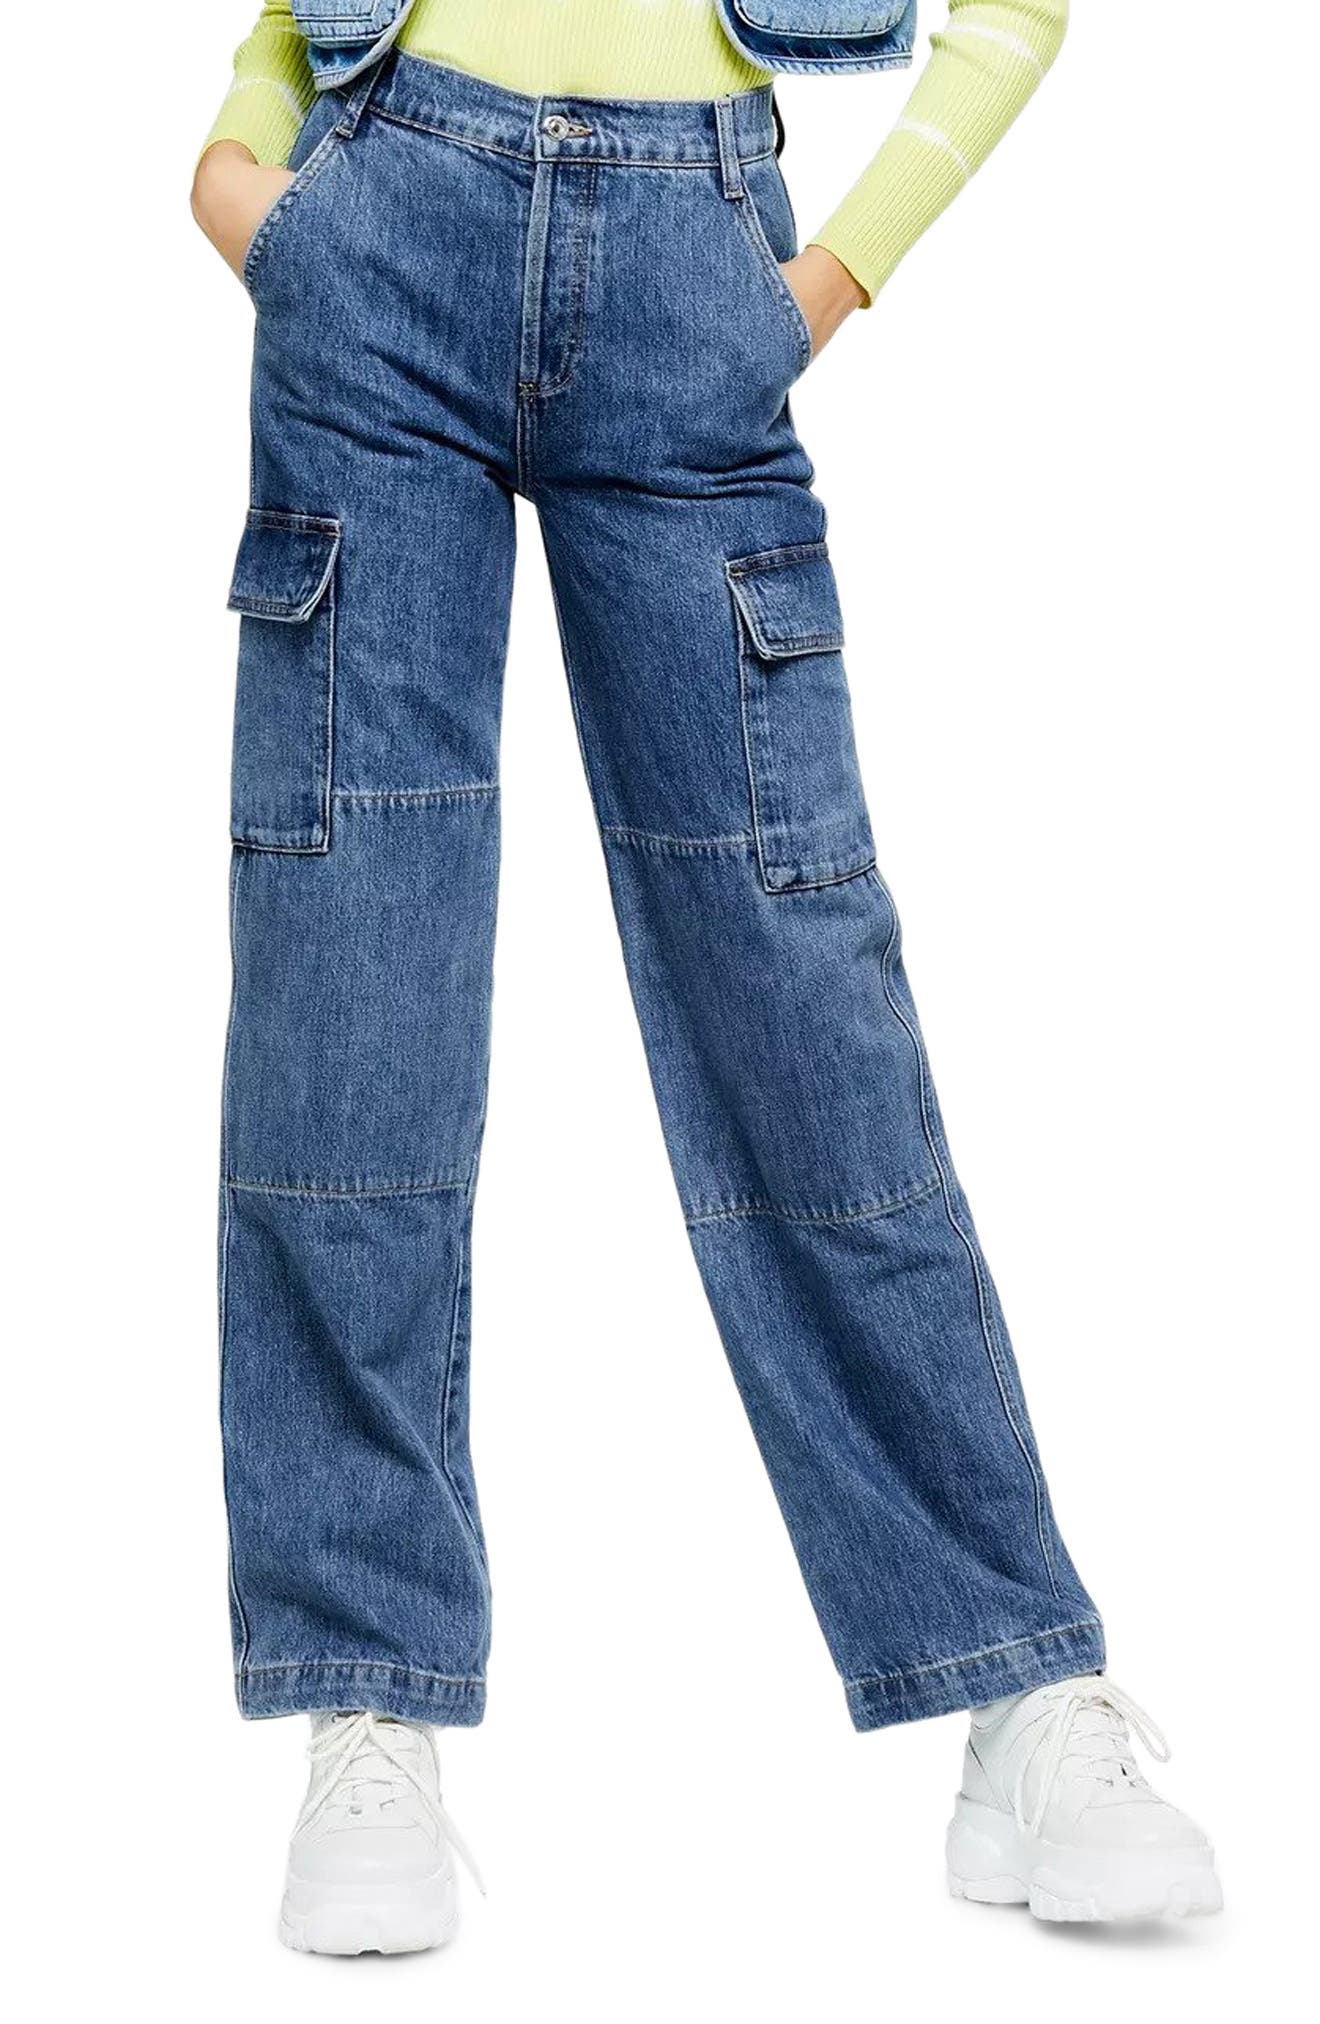 topshop combat jeans